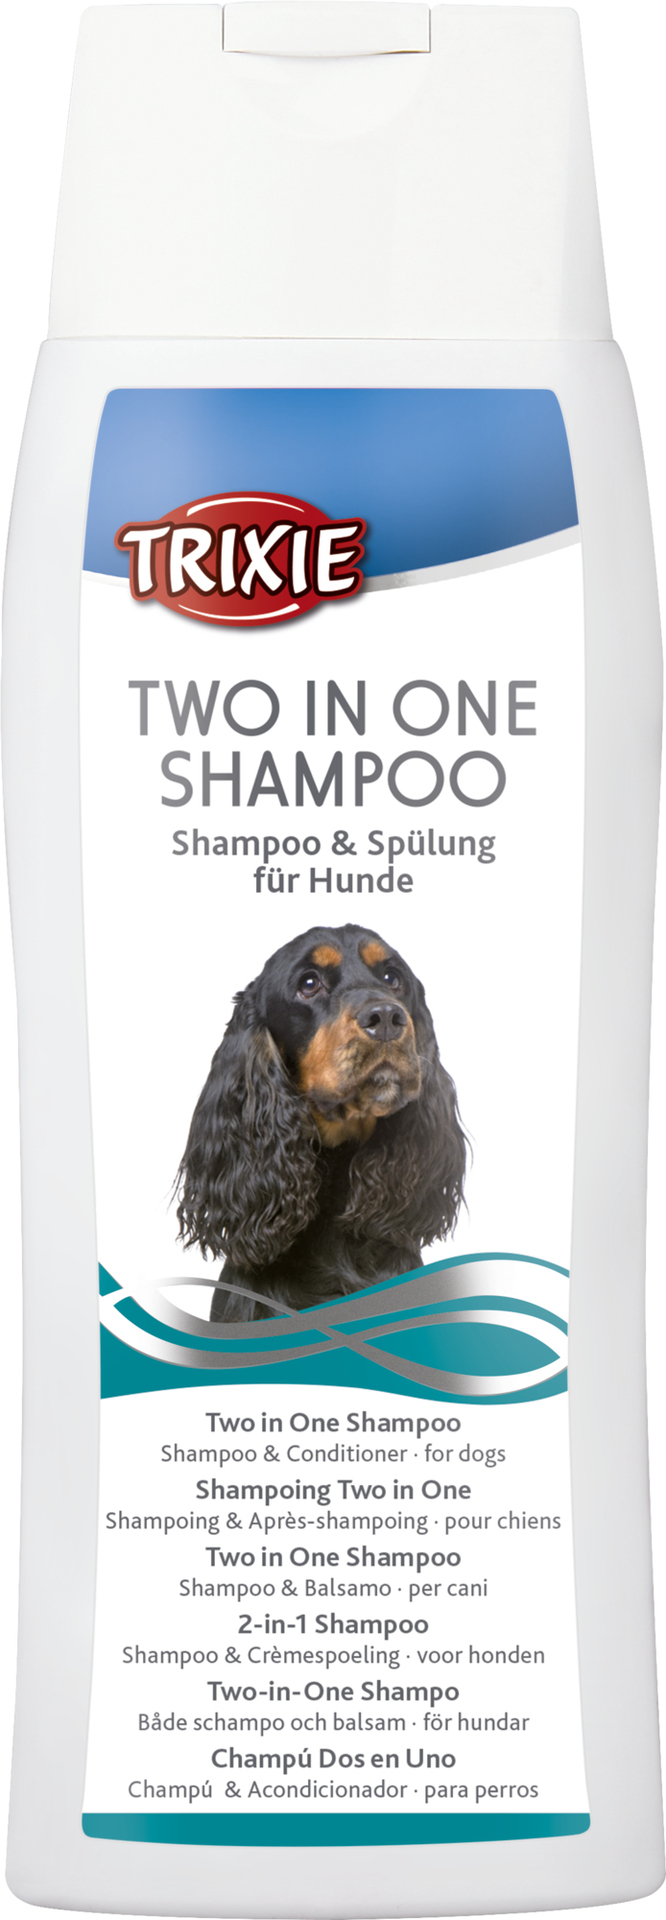 TRIXIE Two in One Shampoo